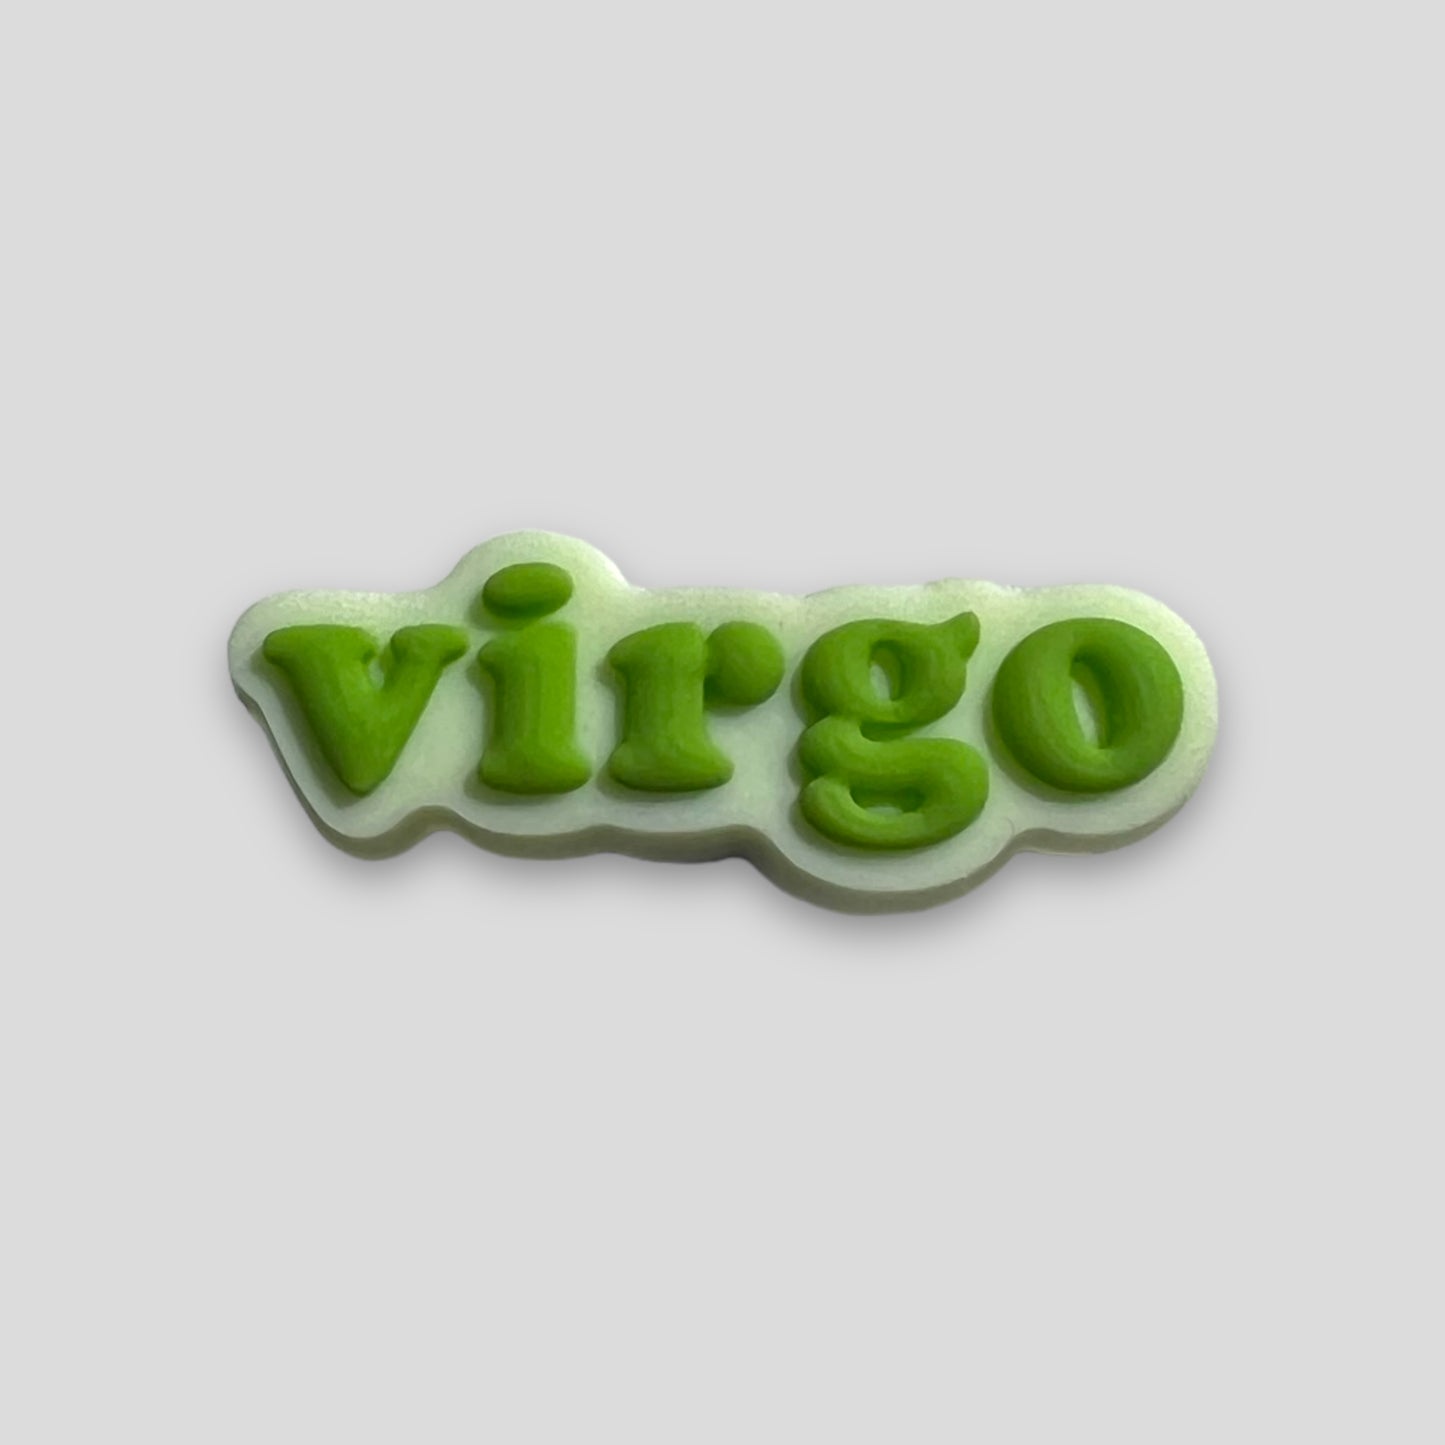 Virgo | Zodiac Signs